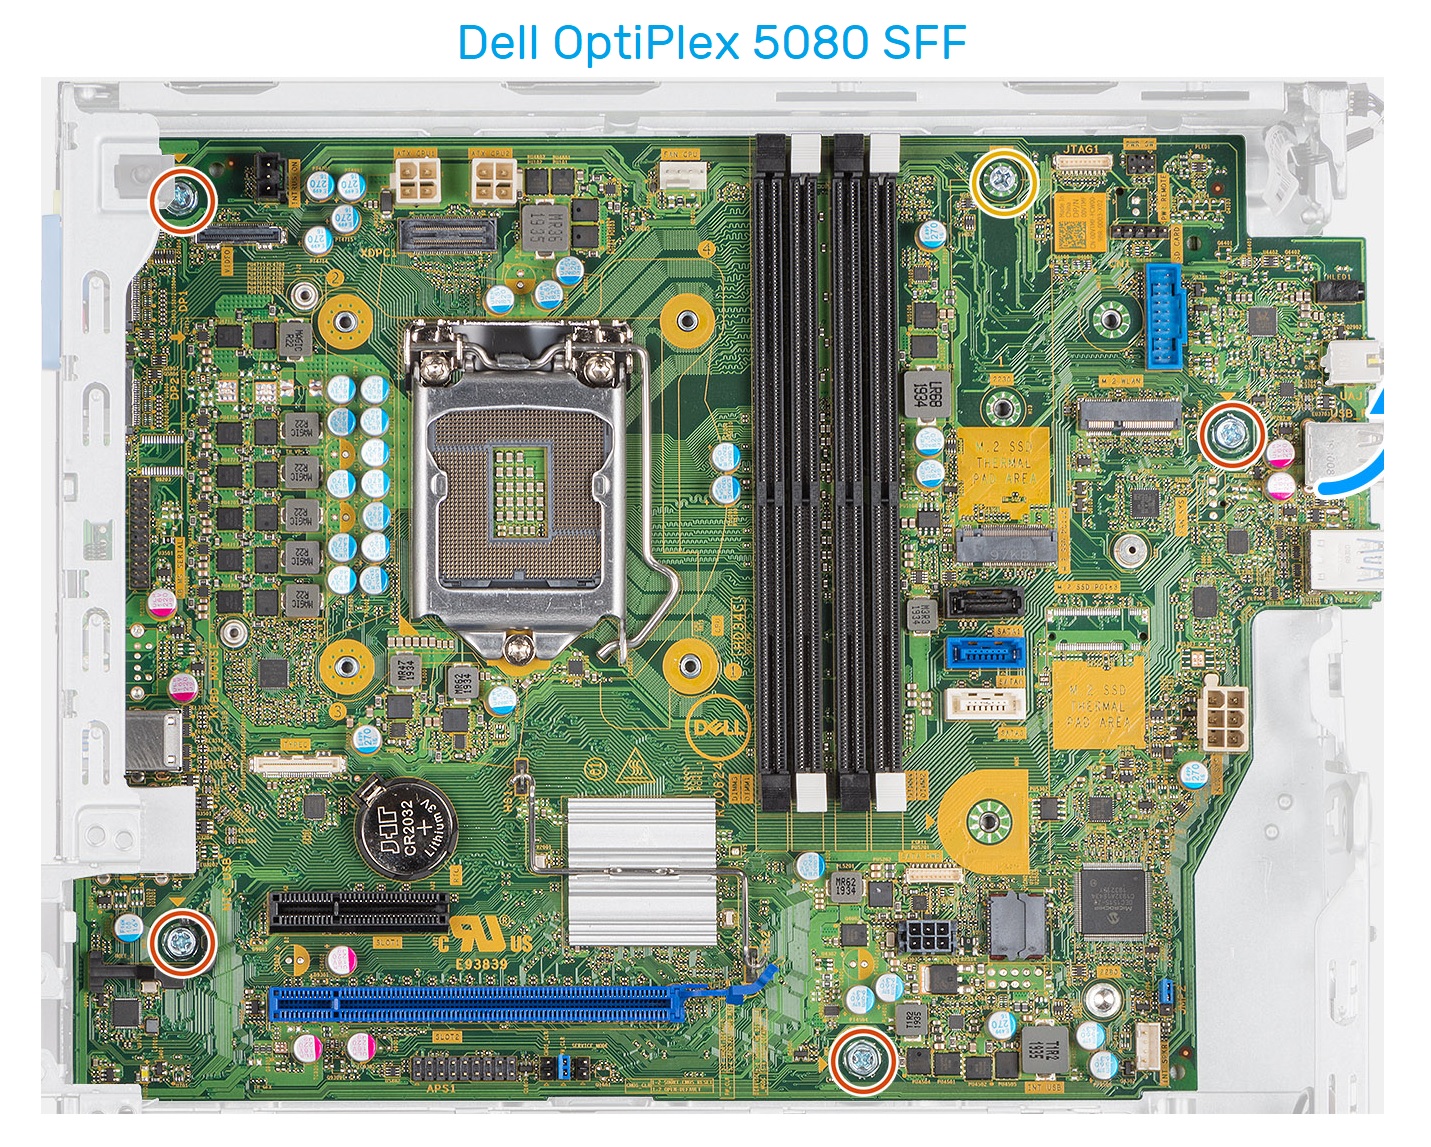 Dell_OptiPlex_5080_SFF_motherboard.jpg motherboard layout